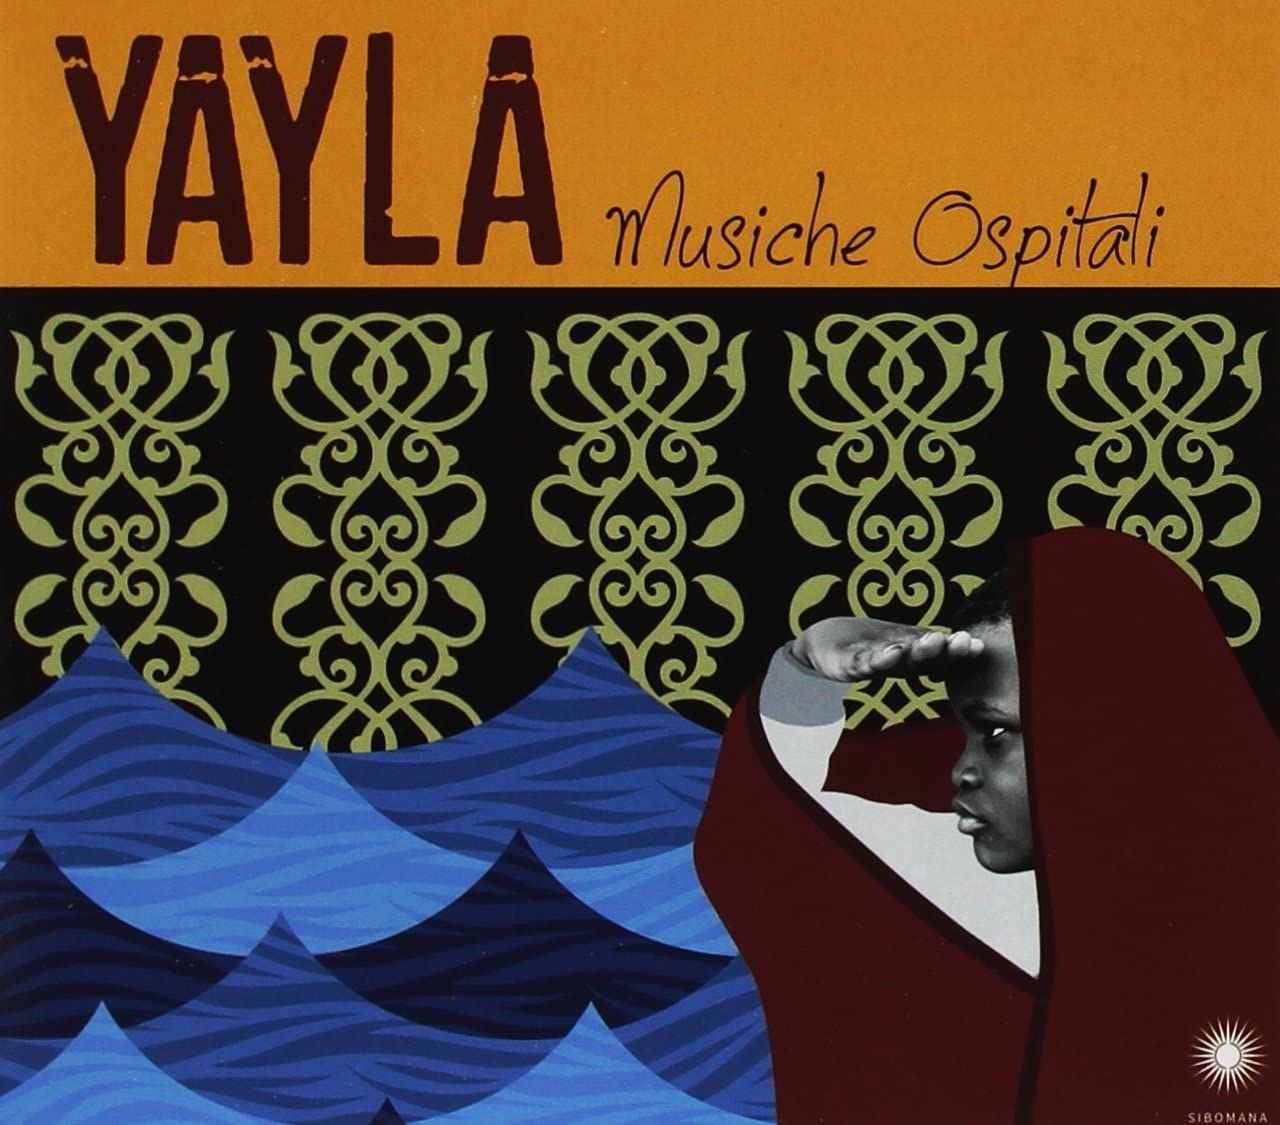 A.A.V.V. – Yayla Musiche Ospitali cover album